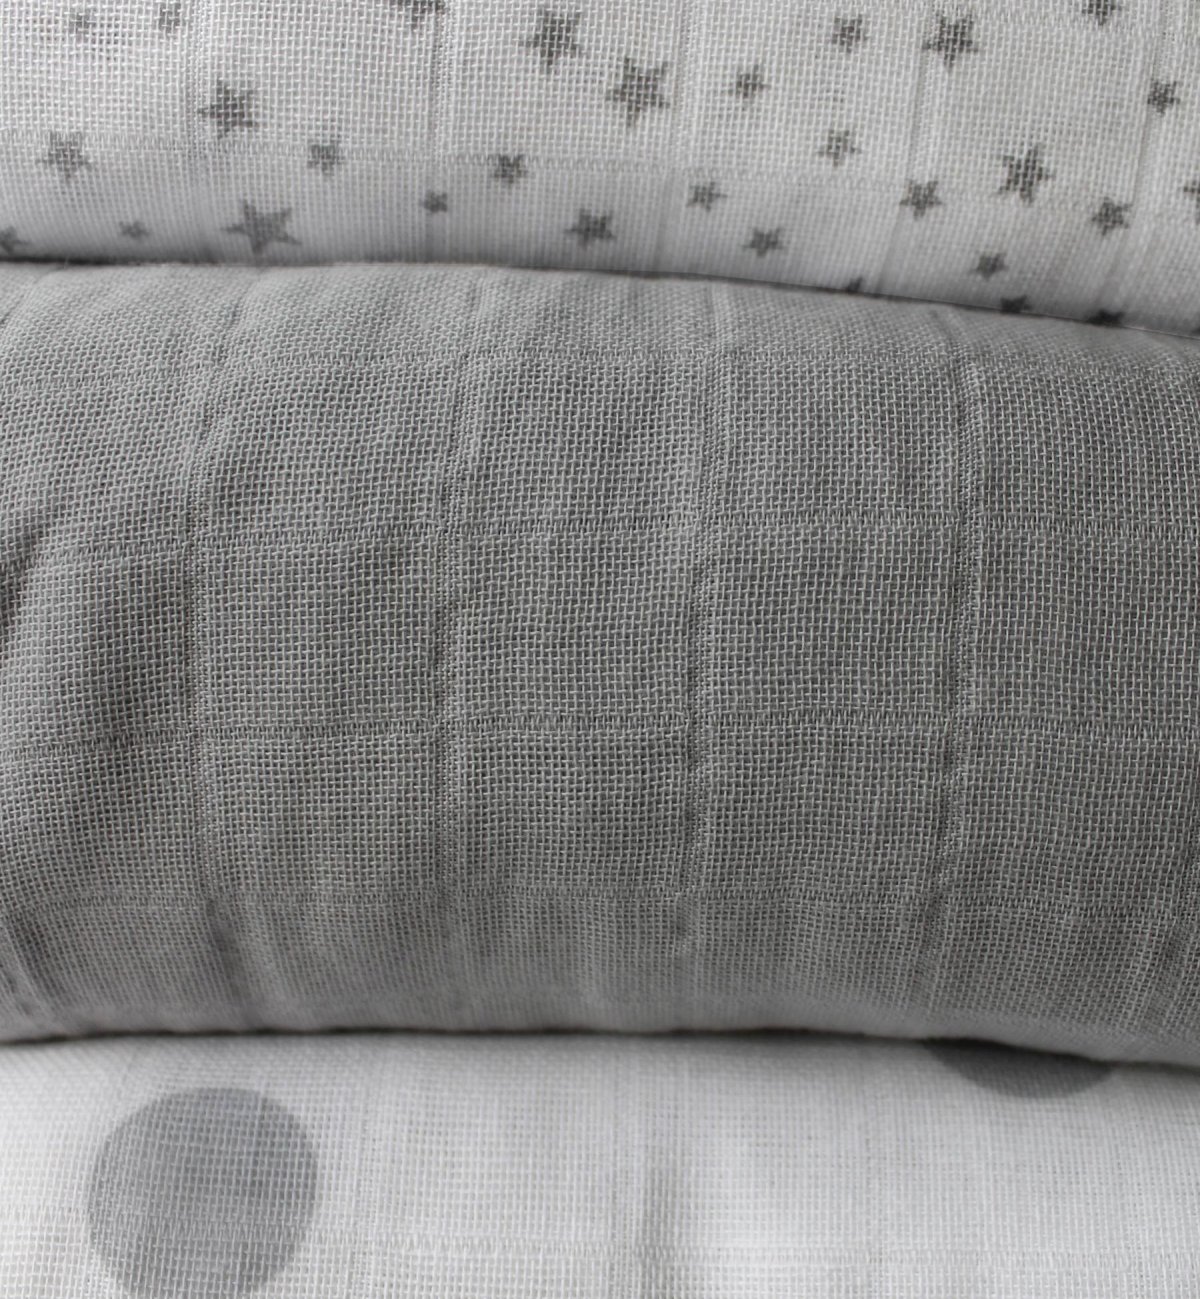 Set of 3 Organic Cotton diapers with polka dot pattern 70x70 cm - Kadolis